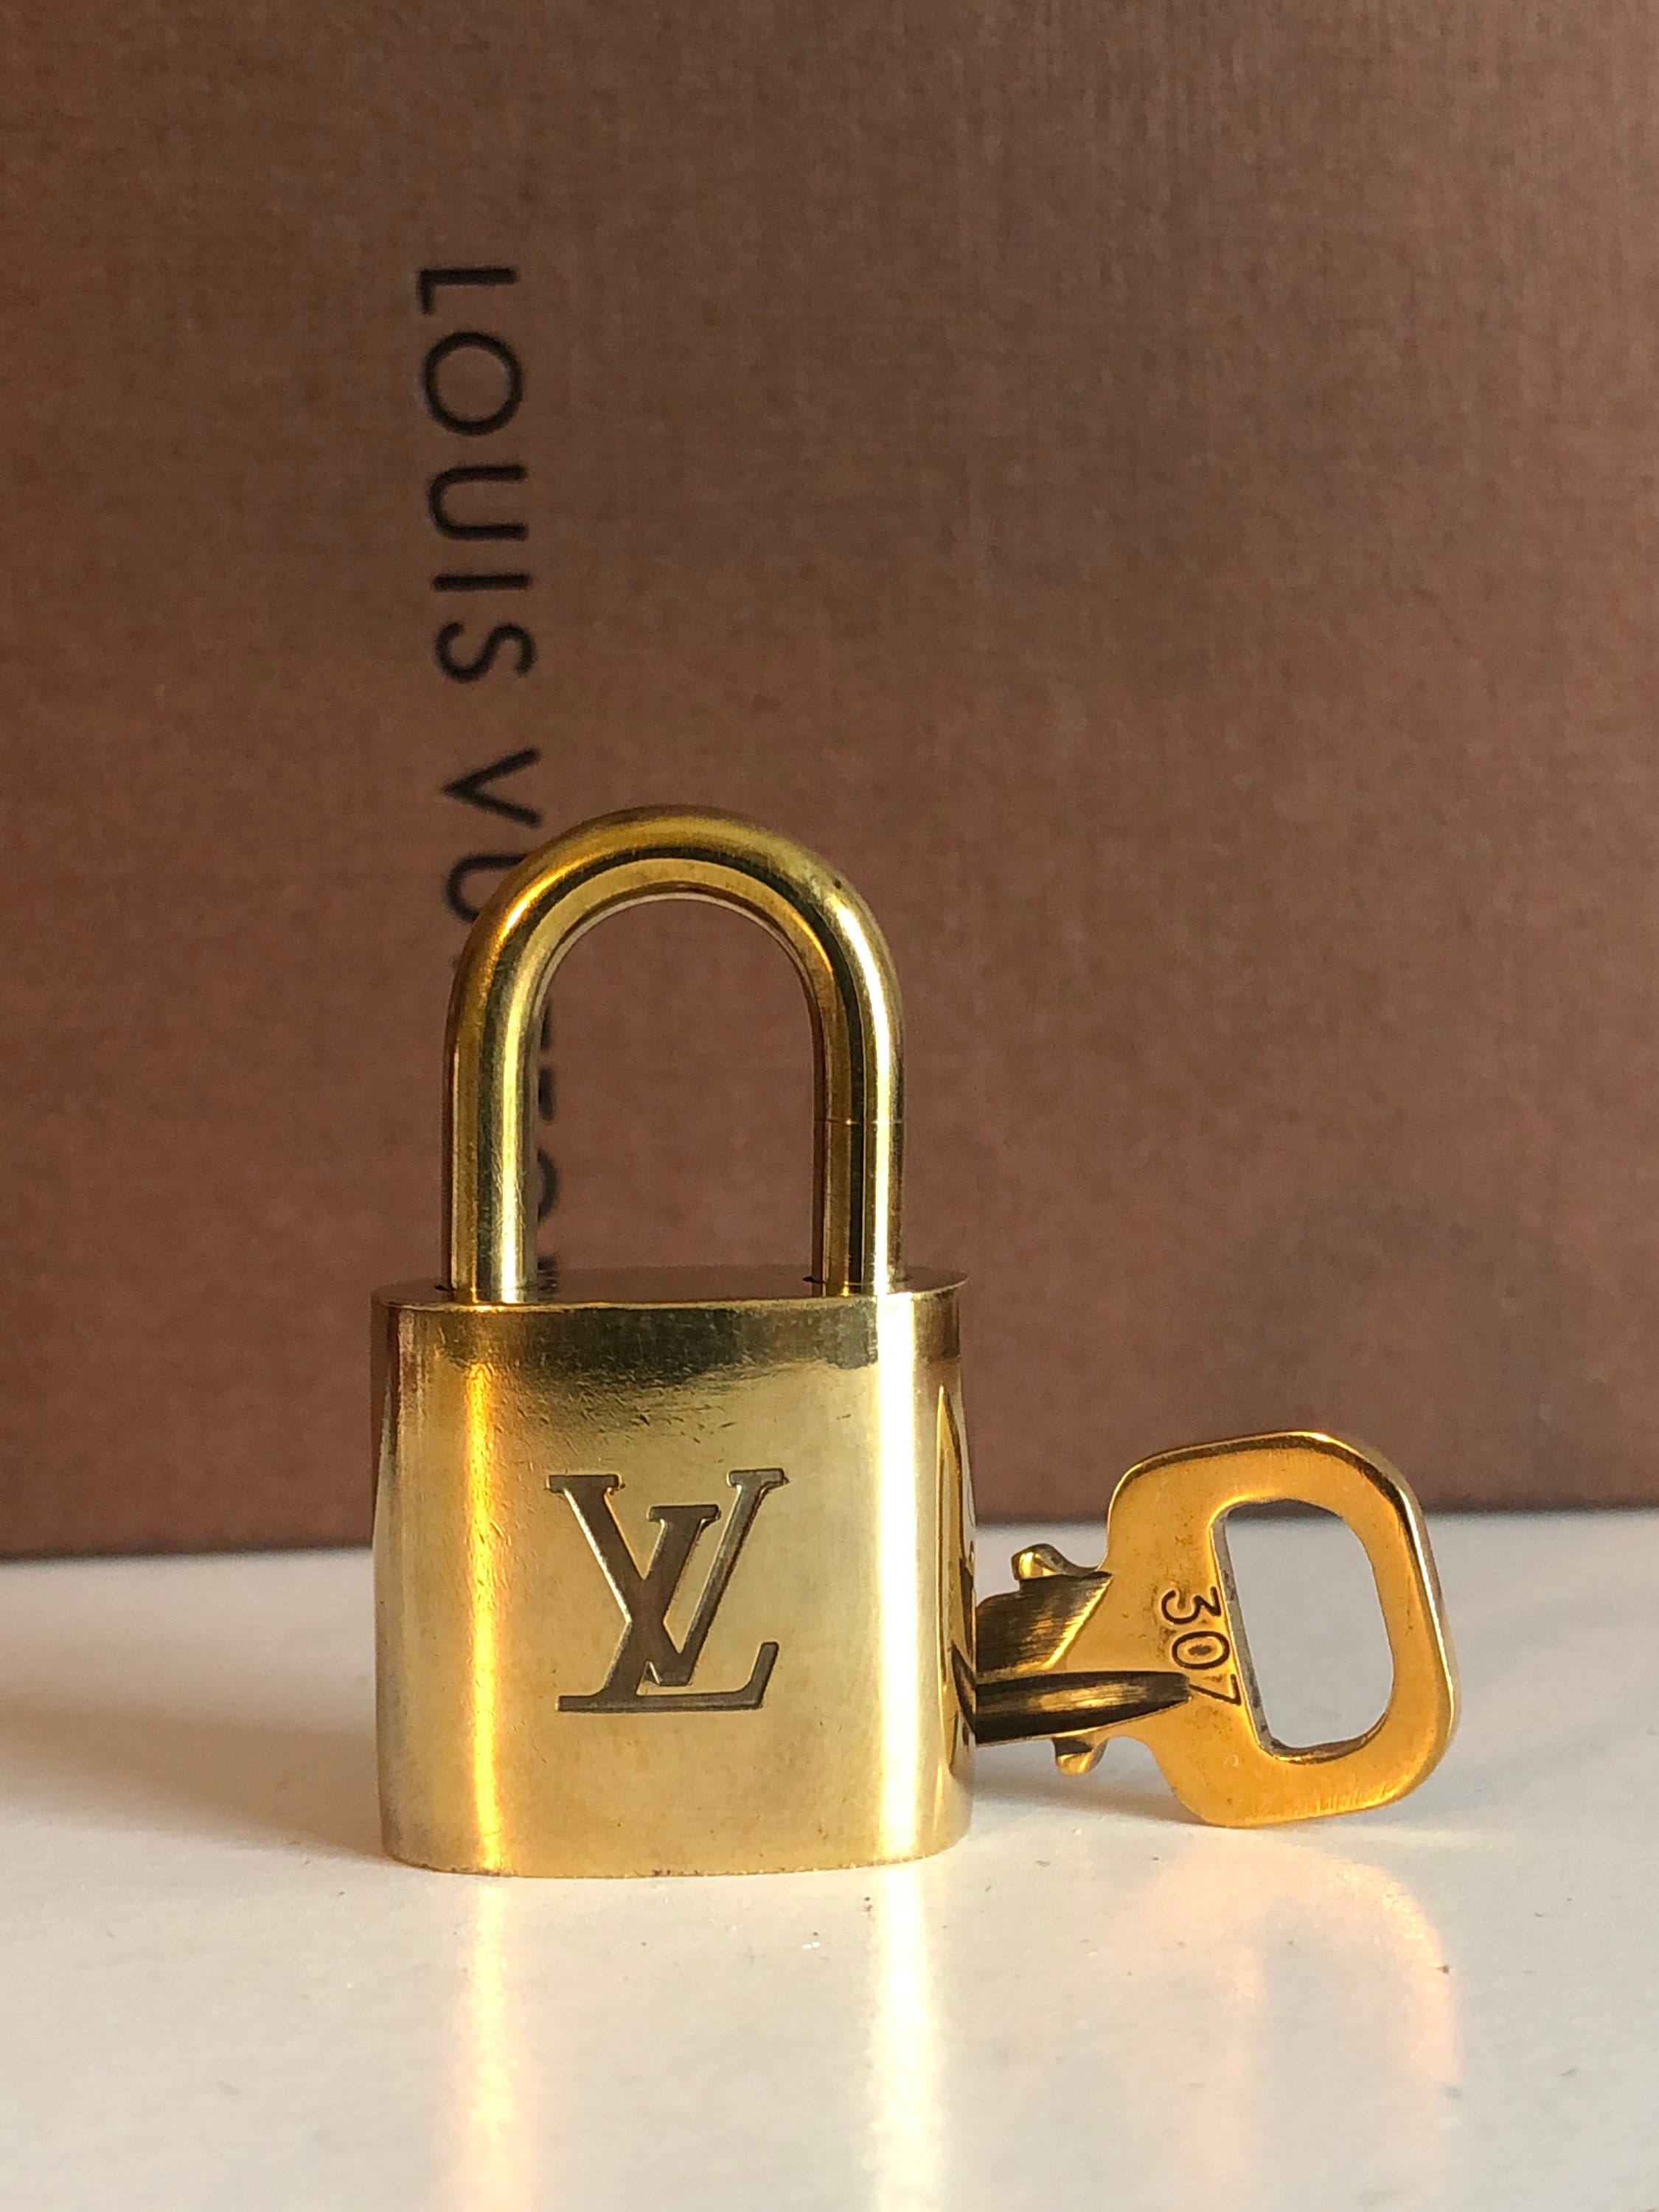 Vuitton Lock Key 